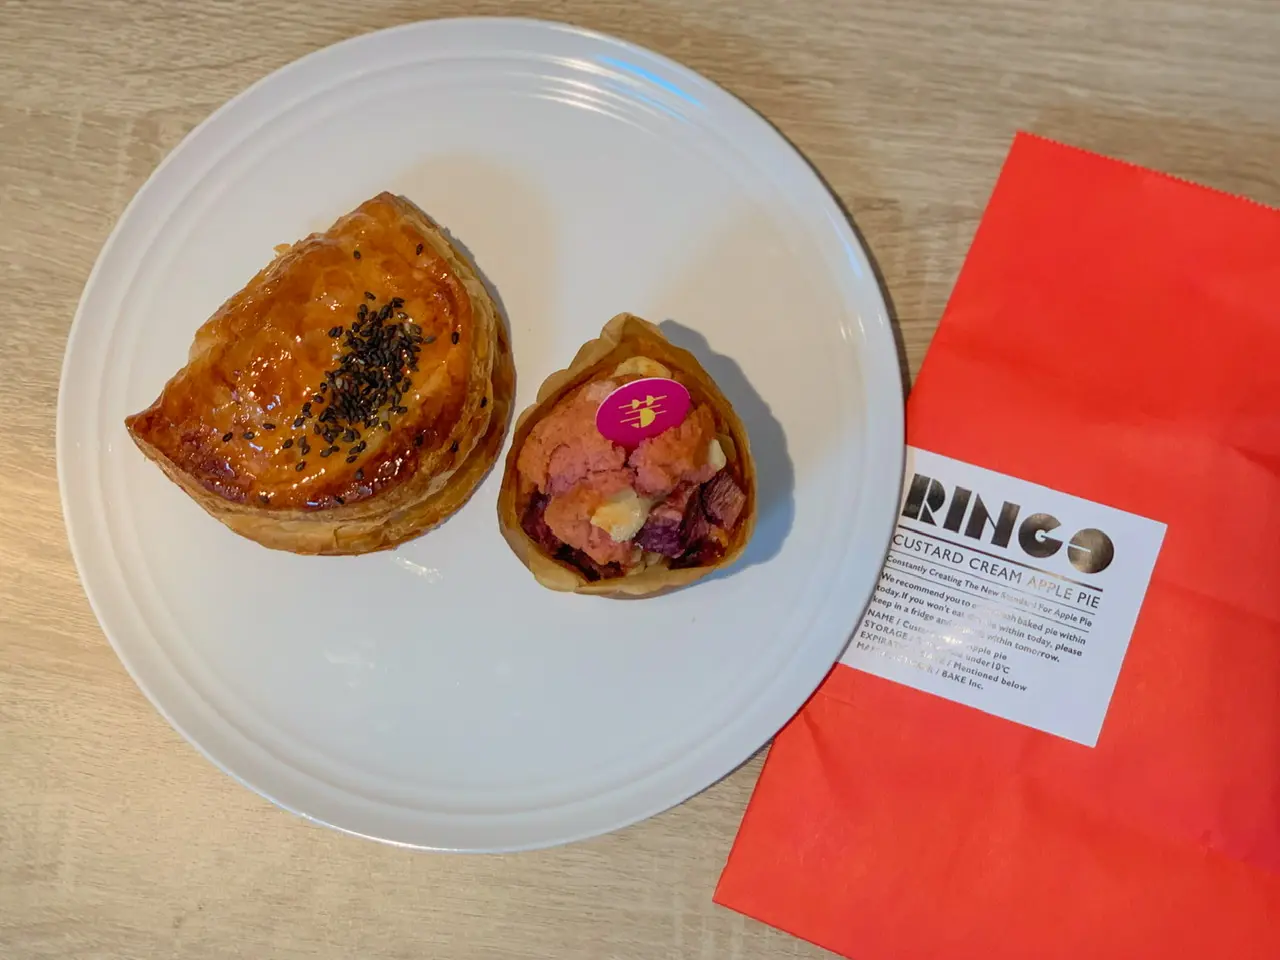 RINGOの焼きたてカスタード安納芋アップルパイと紫芋アップルパイマフィン